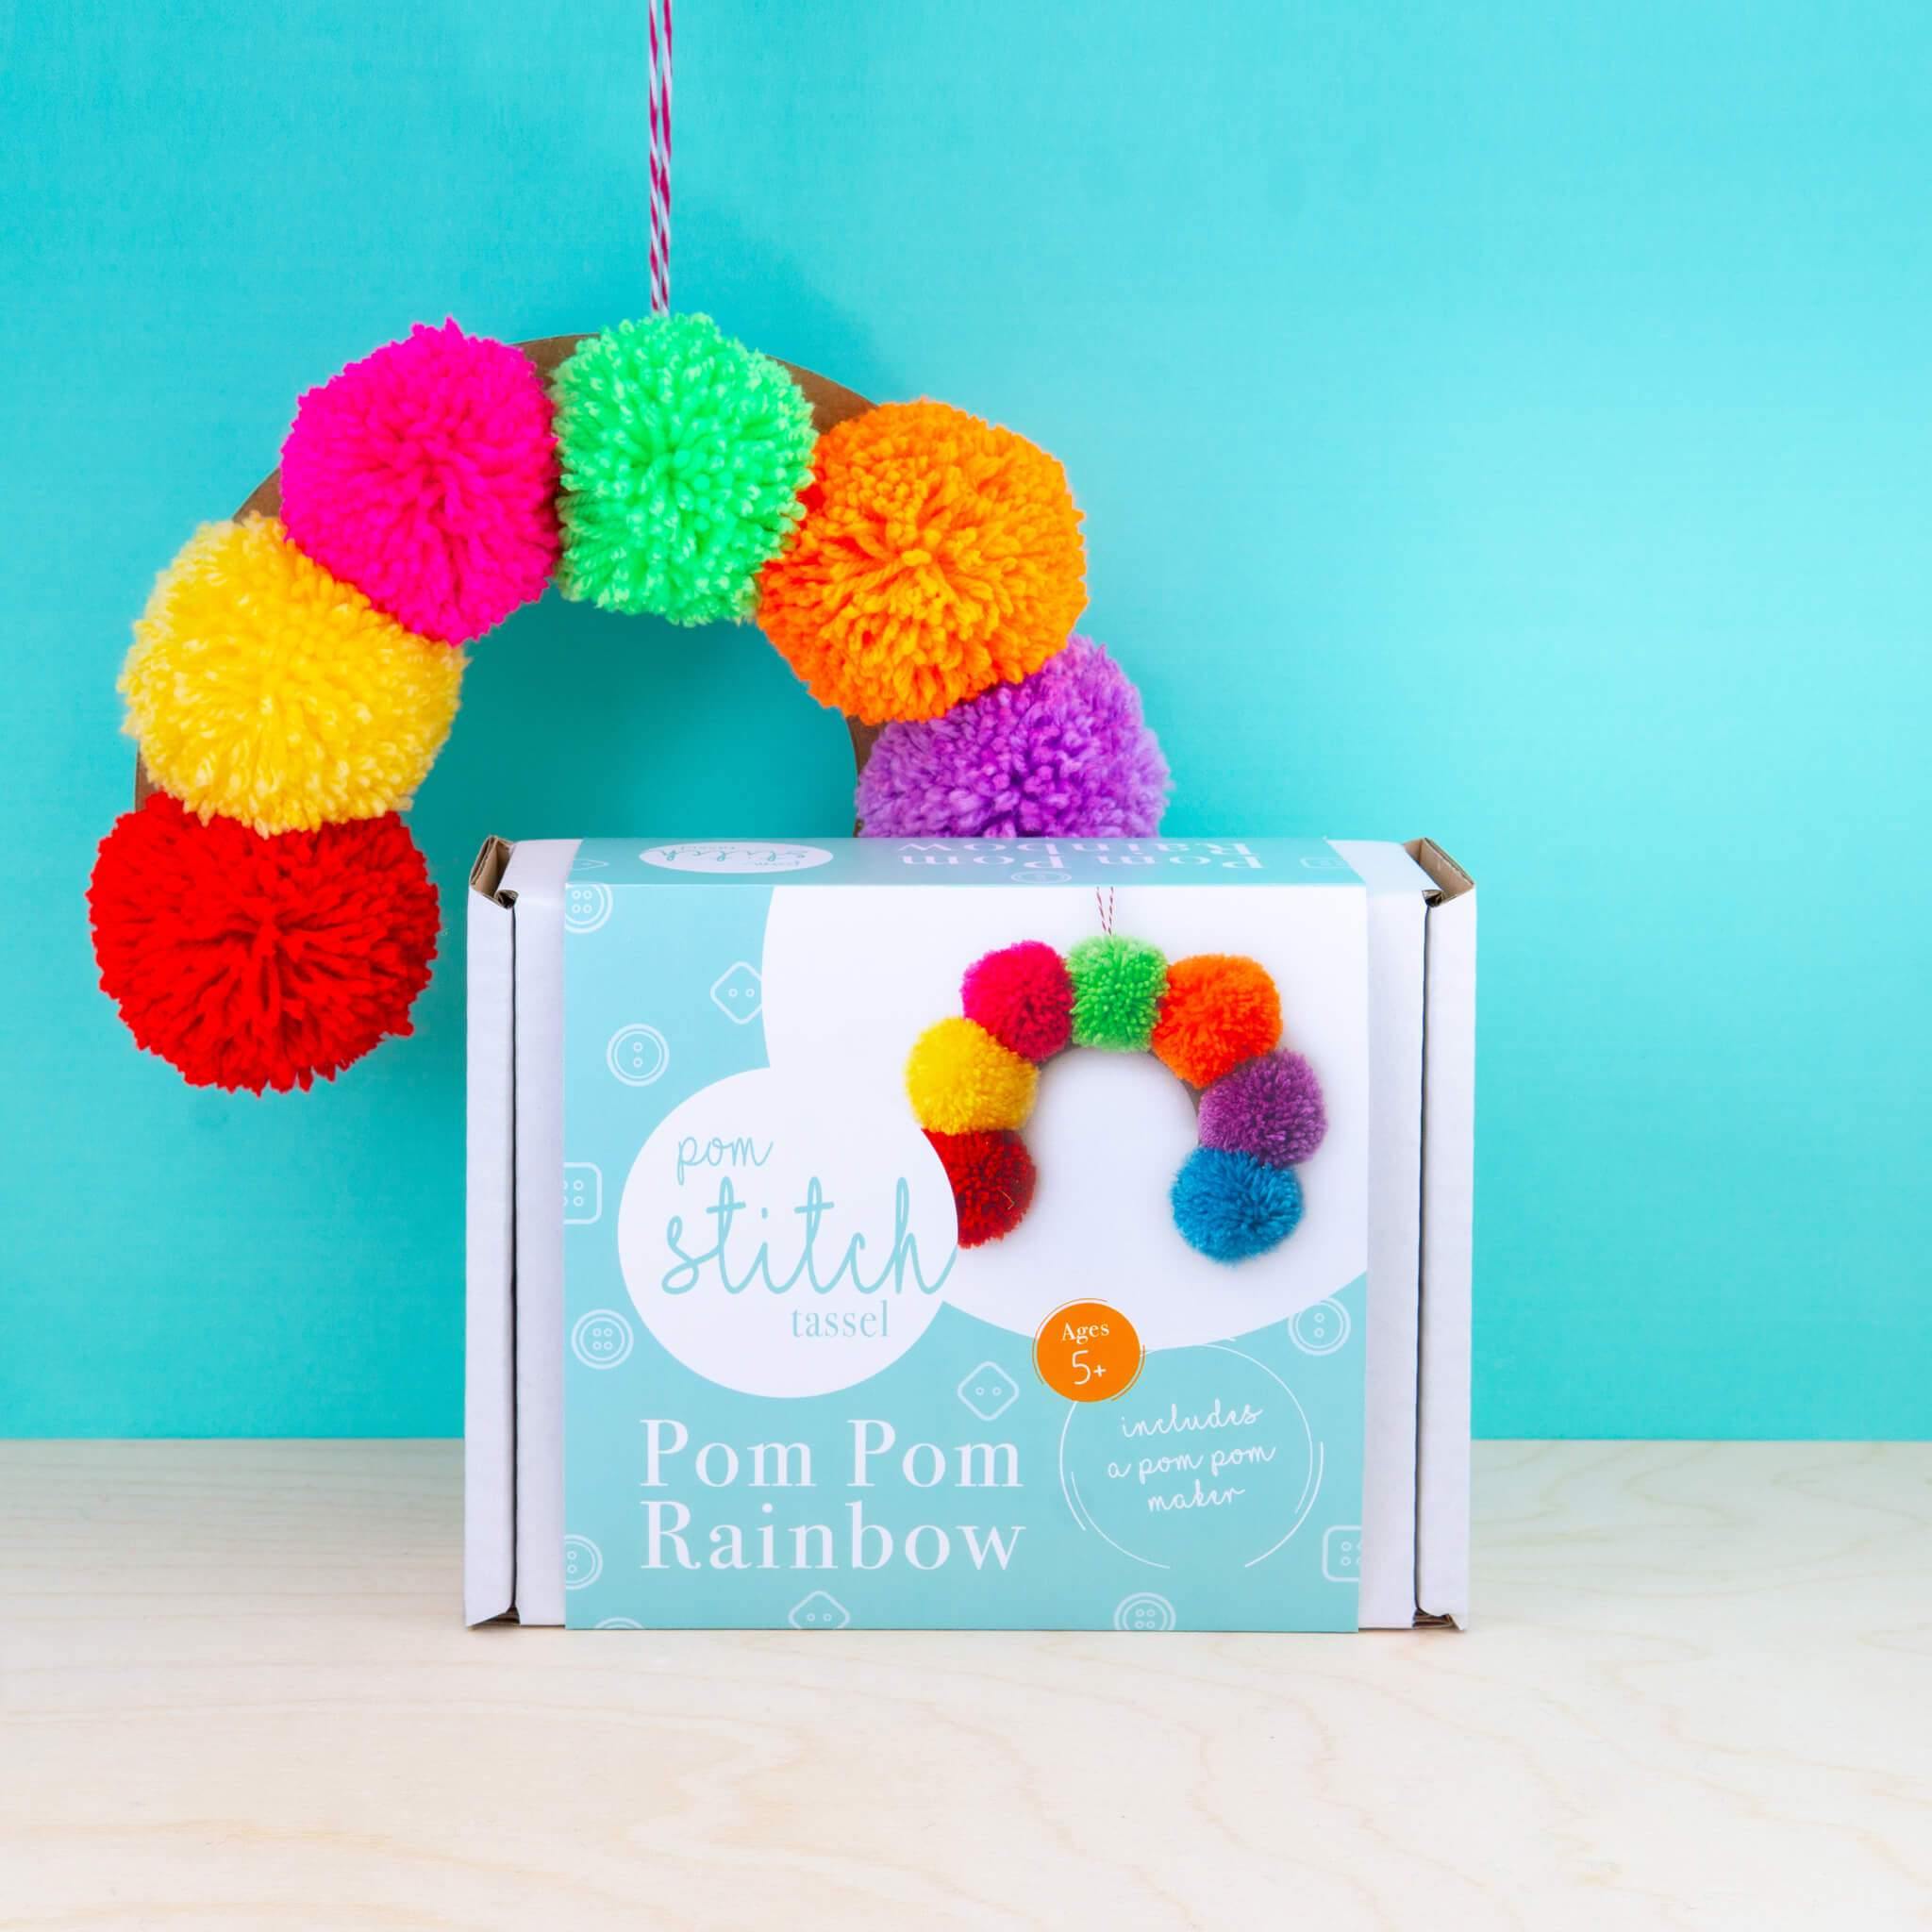 How to Make a Yarn Pom Pom with a Free Cardboard Template - Sarah Maker